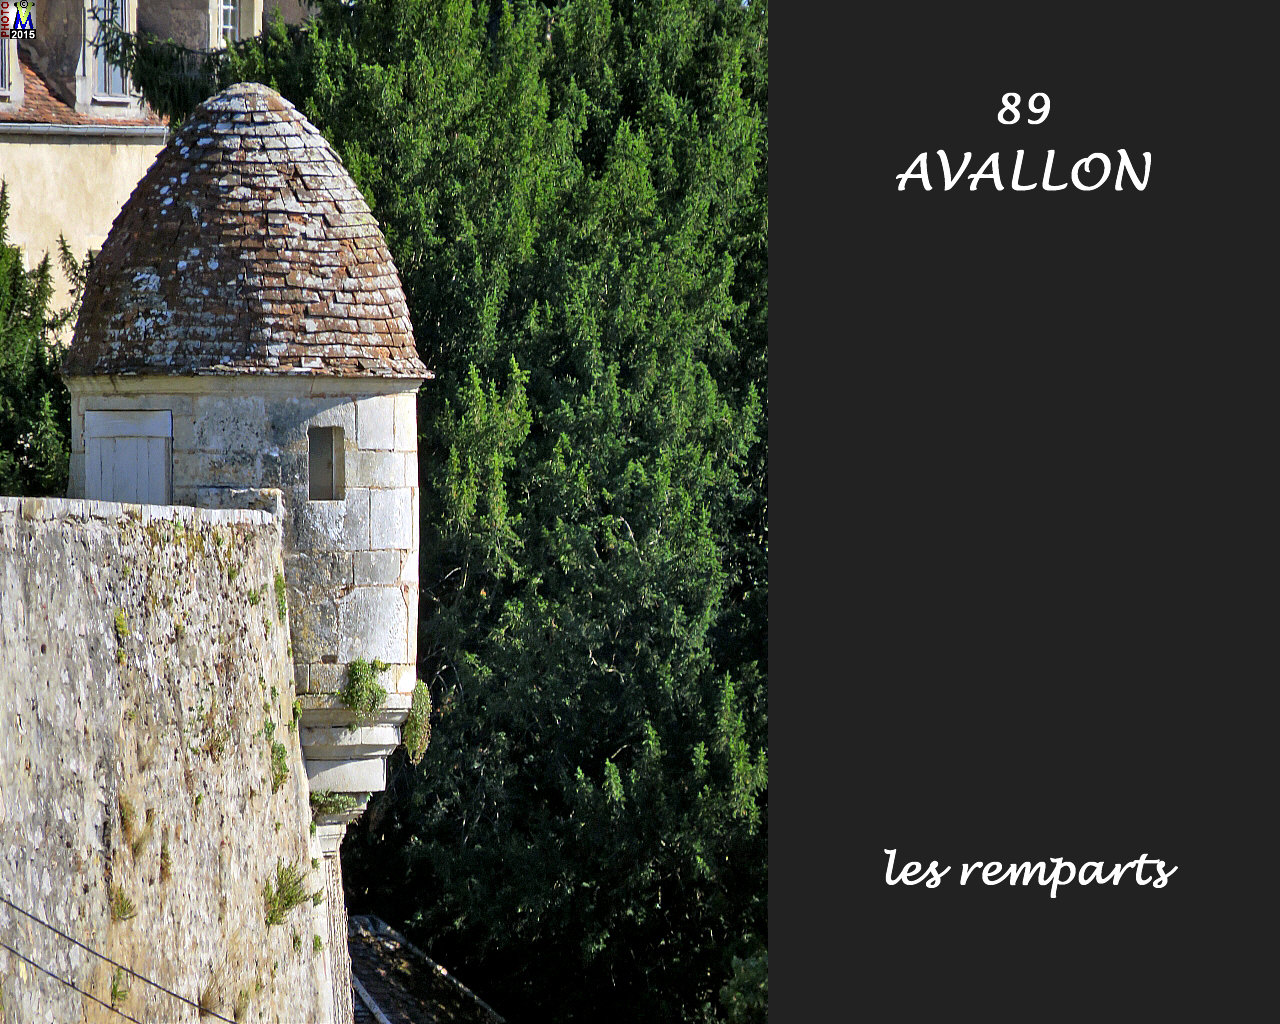 89AVALLON-remparts_102.jpg